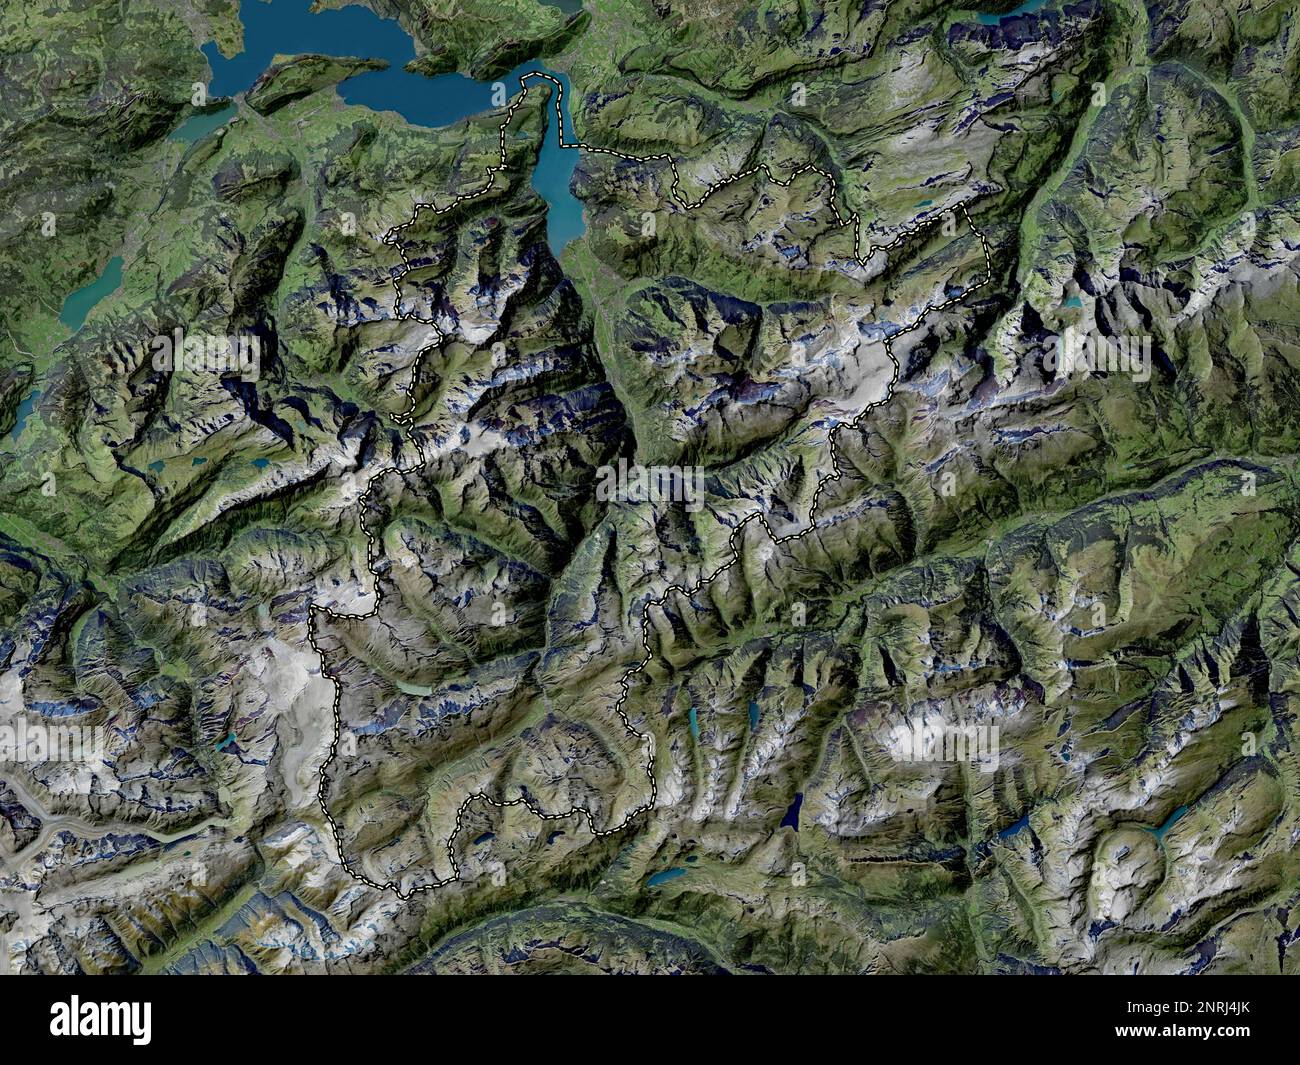 Uri, canton of Switzerland. High resolution satellite map Stock Photo